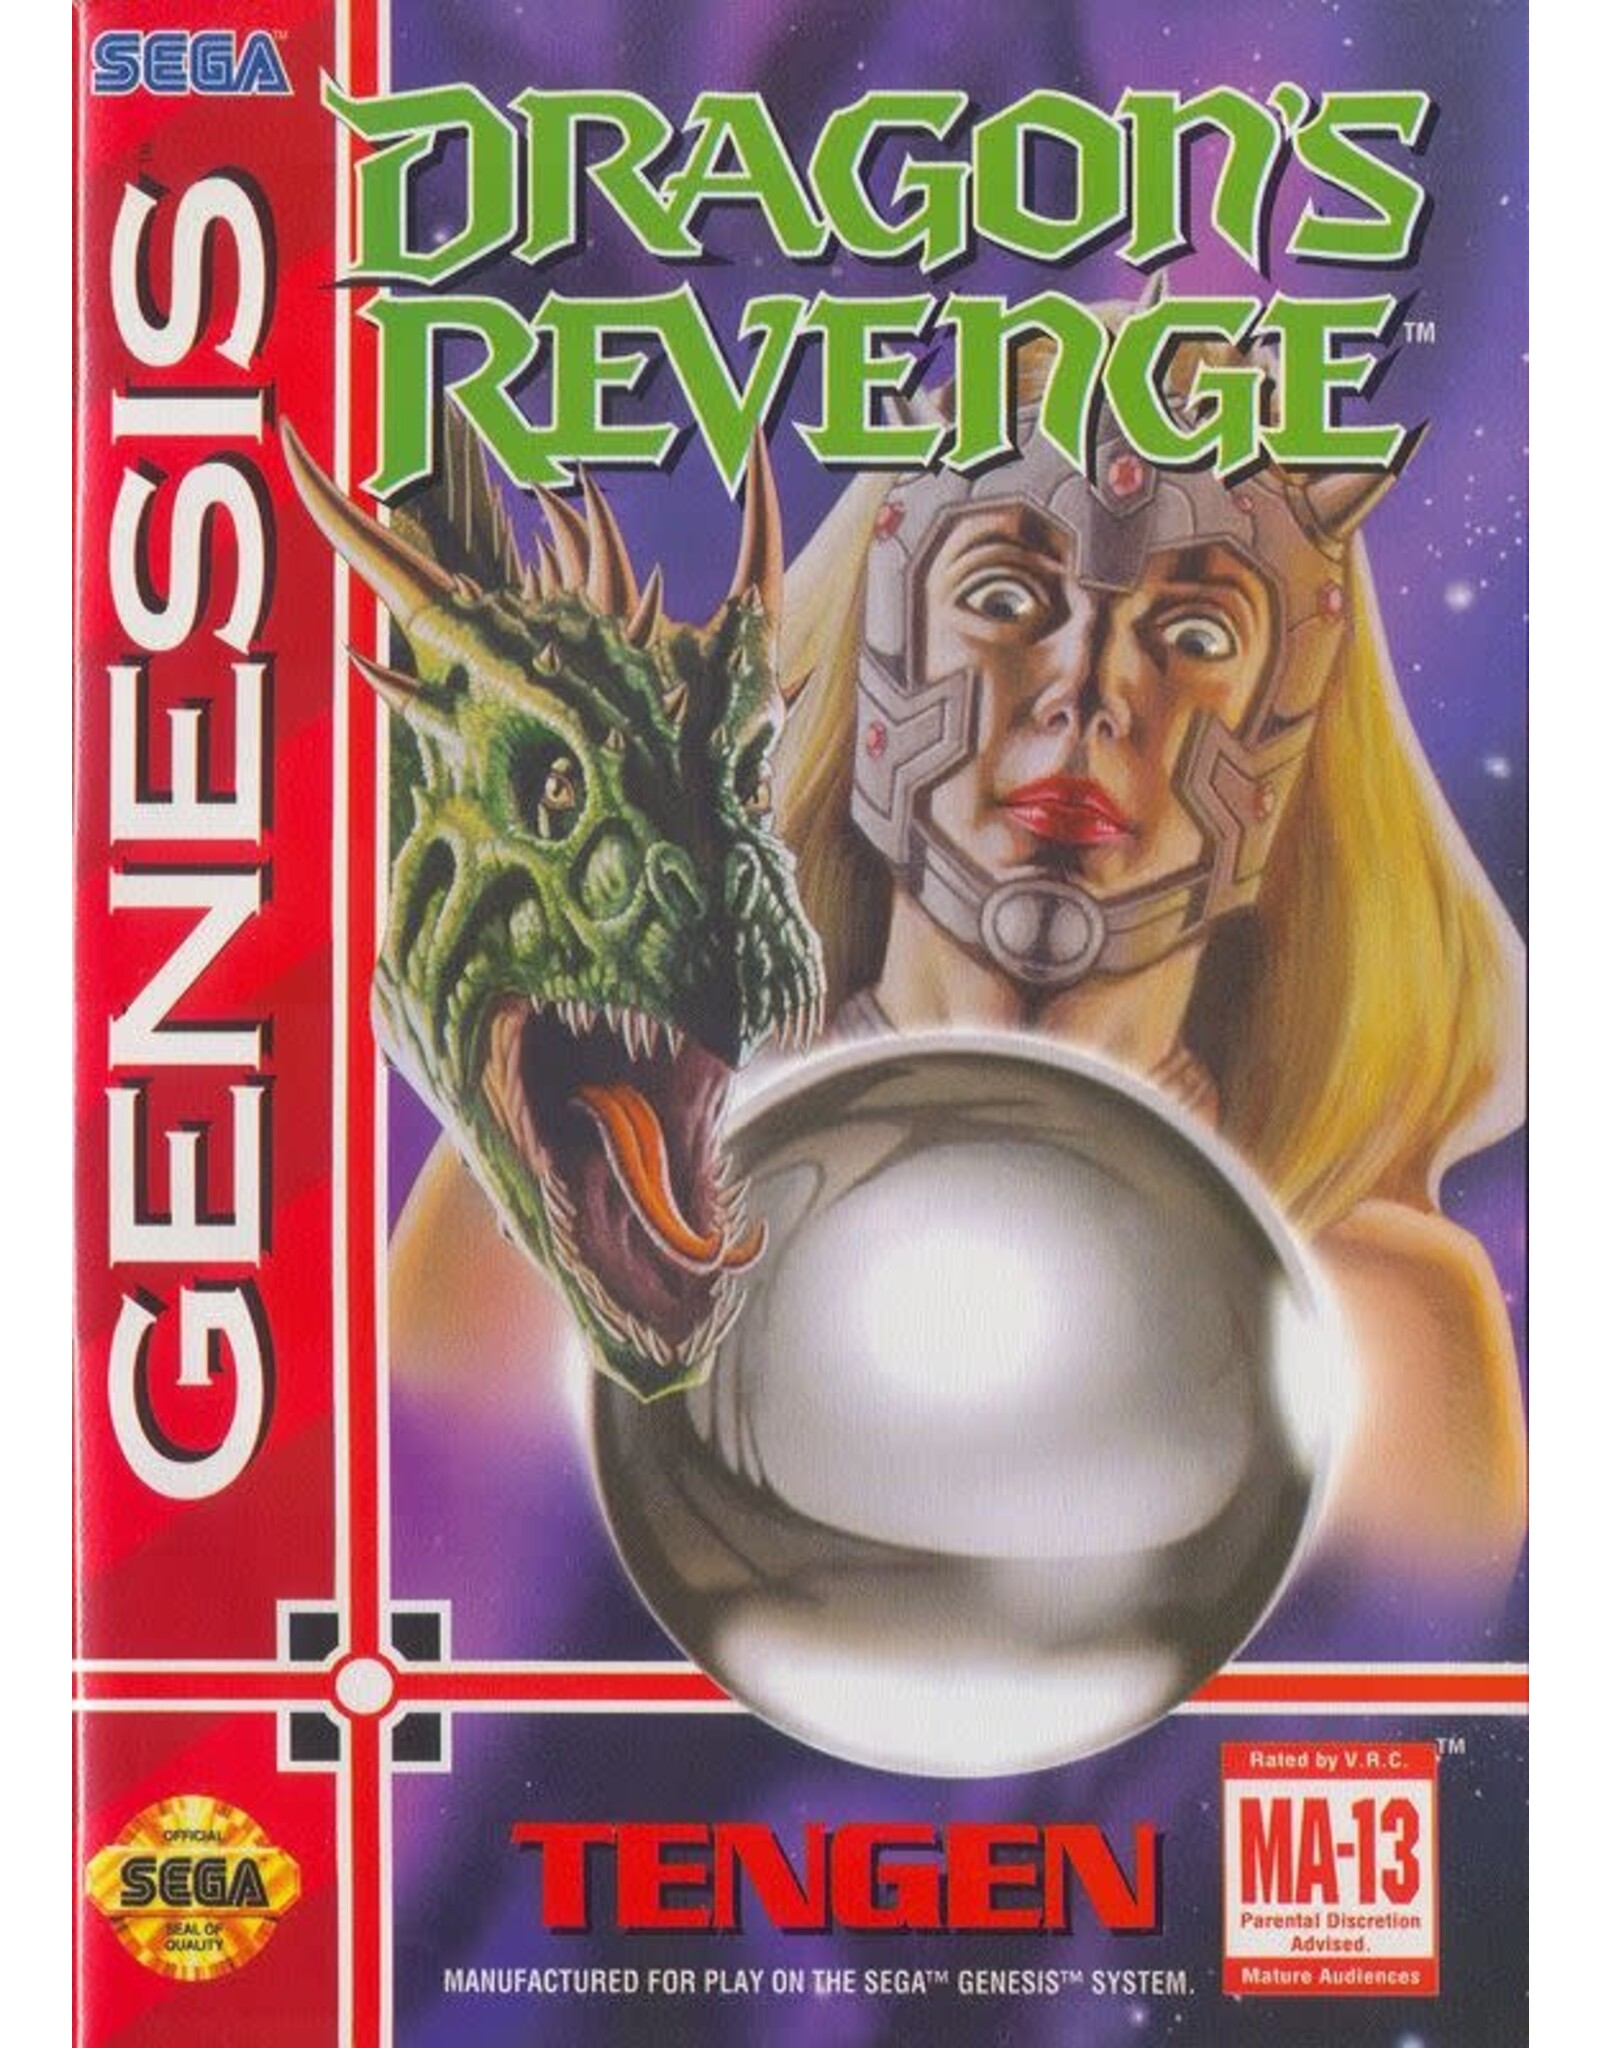 Sega Genesis Dragon's Revenge (Boxed, No Manual, Damaged Sleeve)